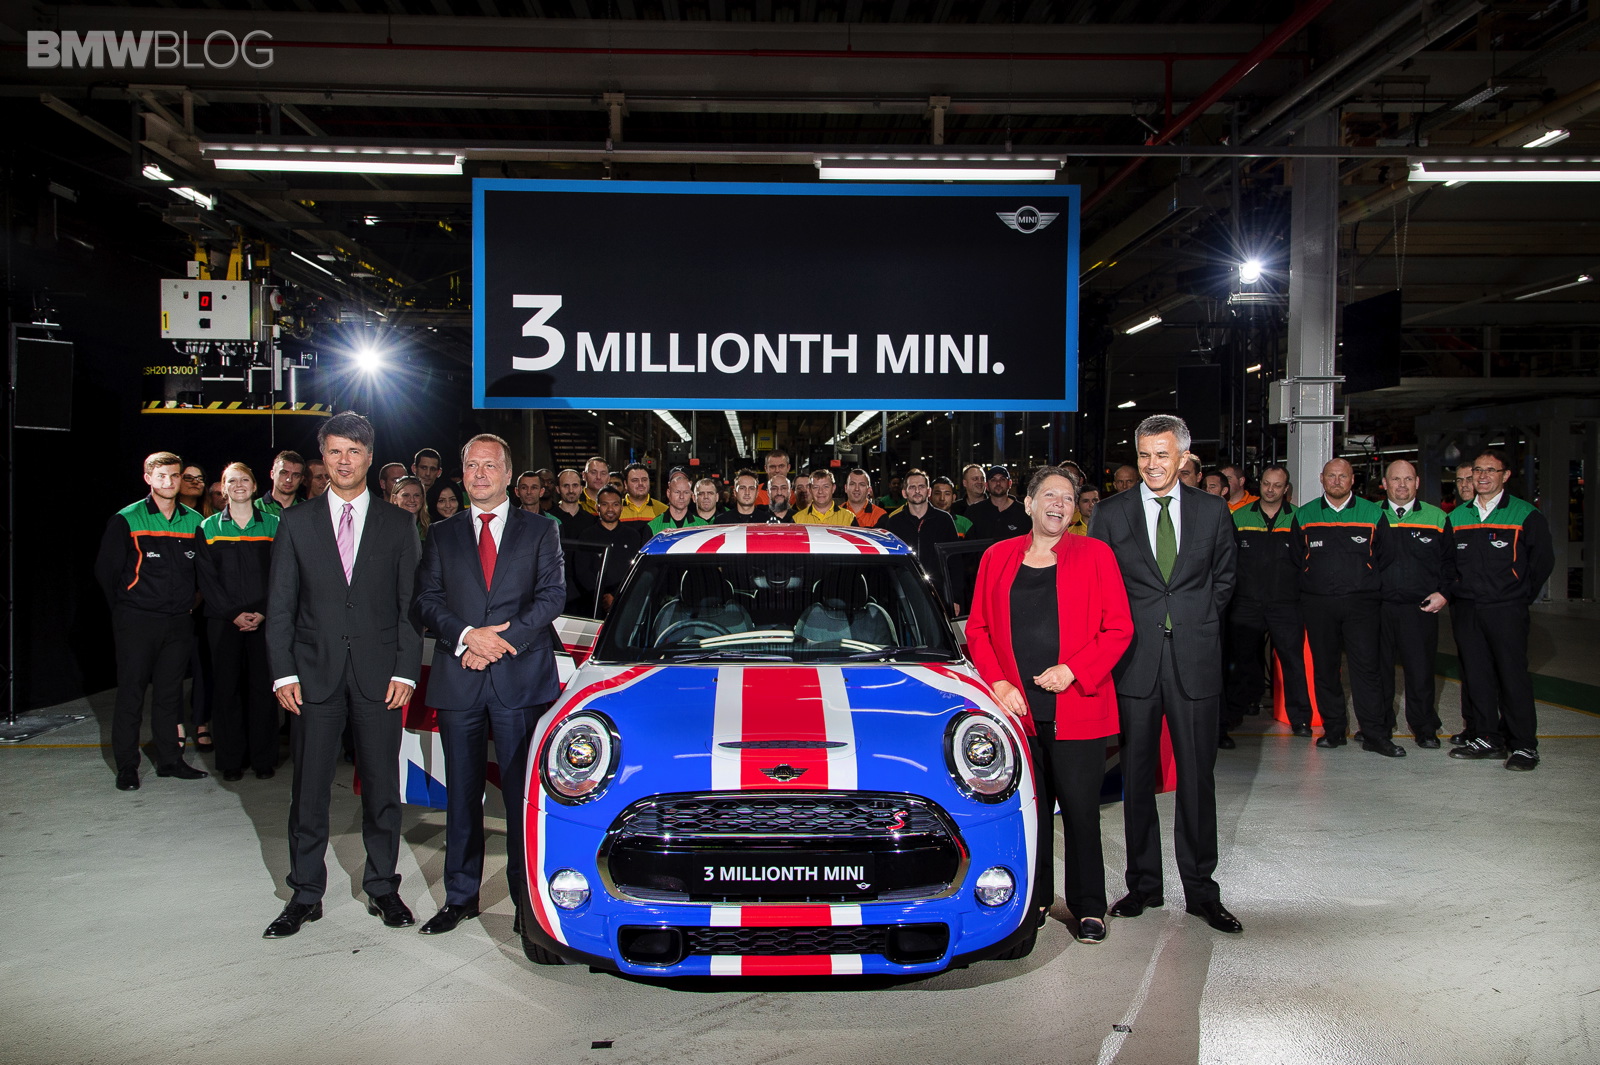 3 million mini cars 70